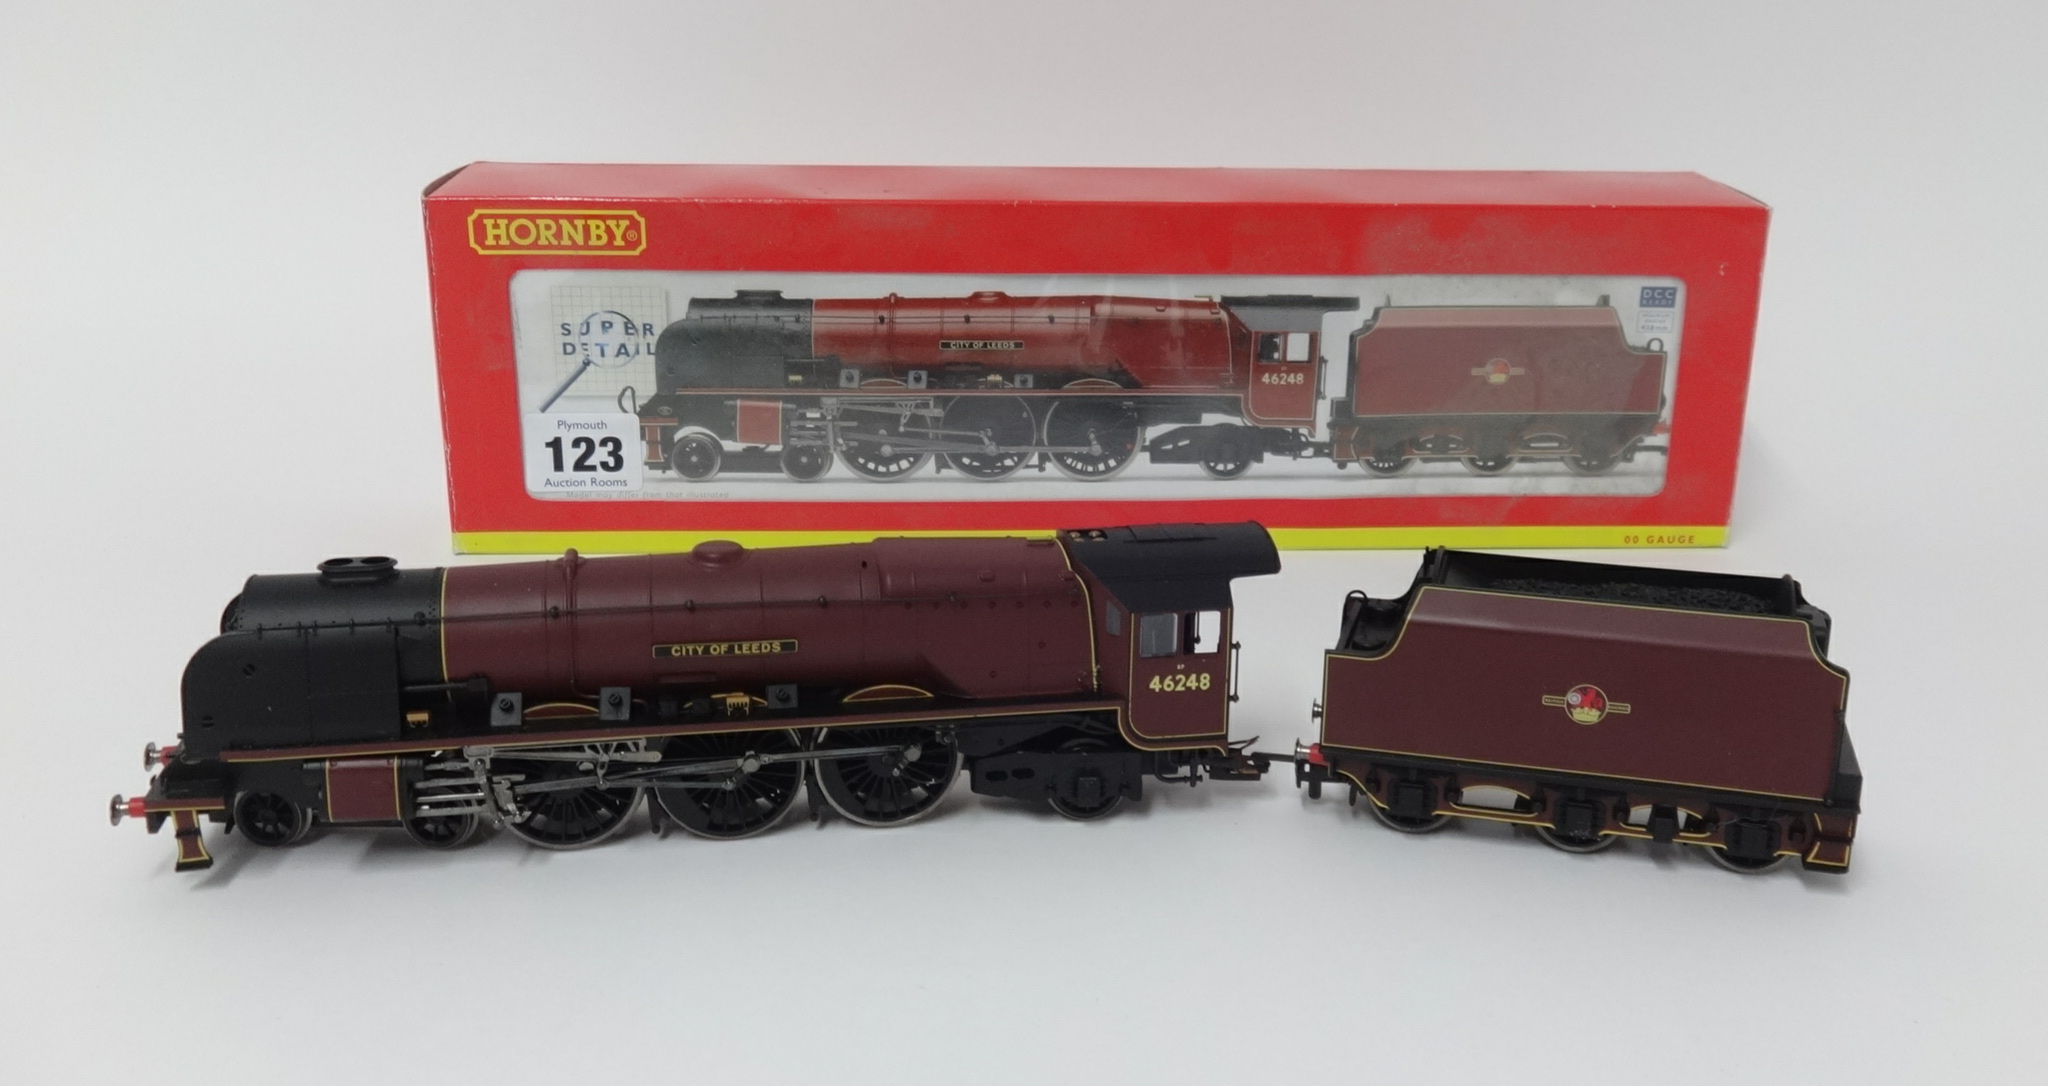 Hornby 00 gauge, Princess Coronation Class loco, R2552, 46248, City of Leeds, boxed.